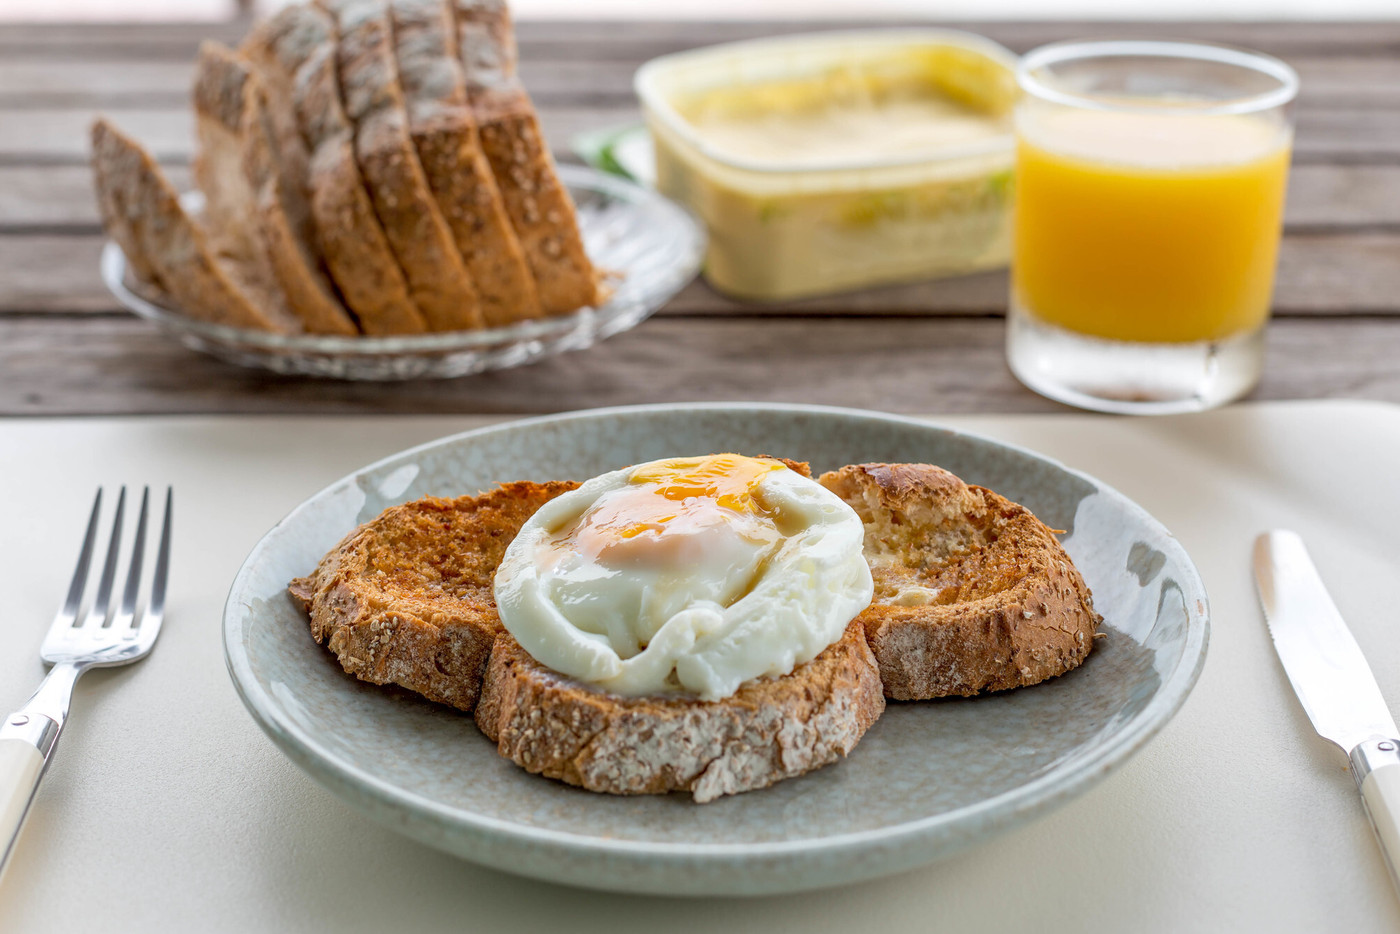 Breakfast fried eggs on toast with orange juice a